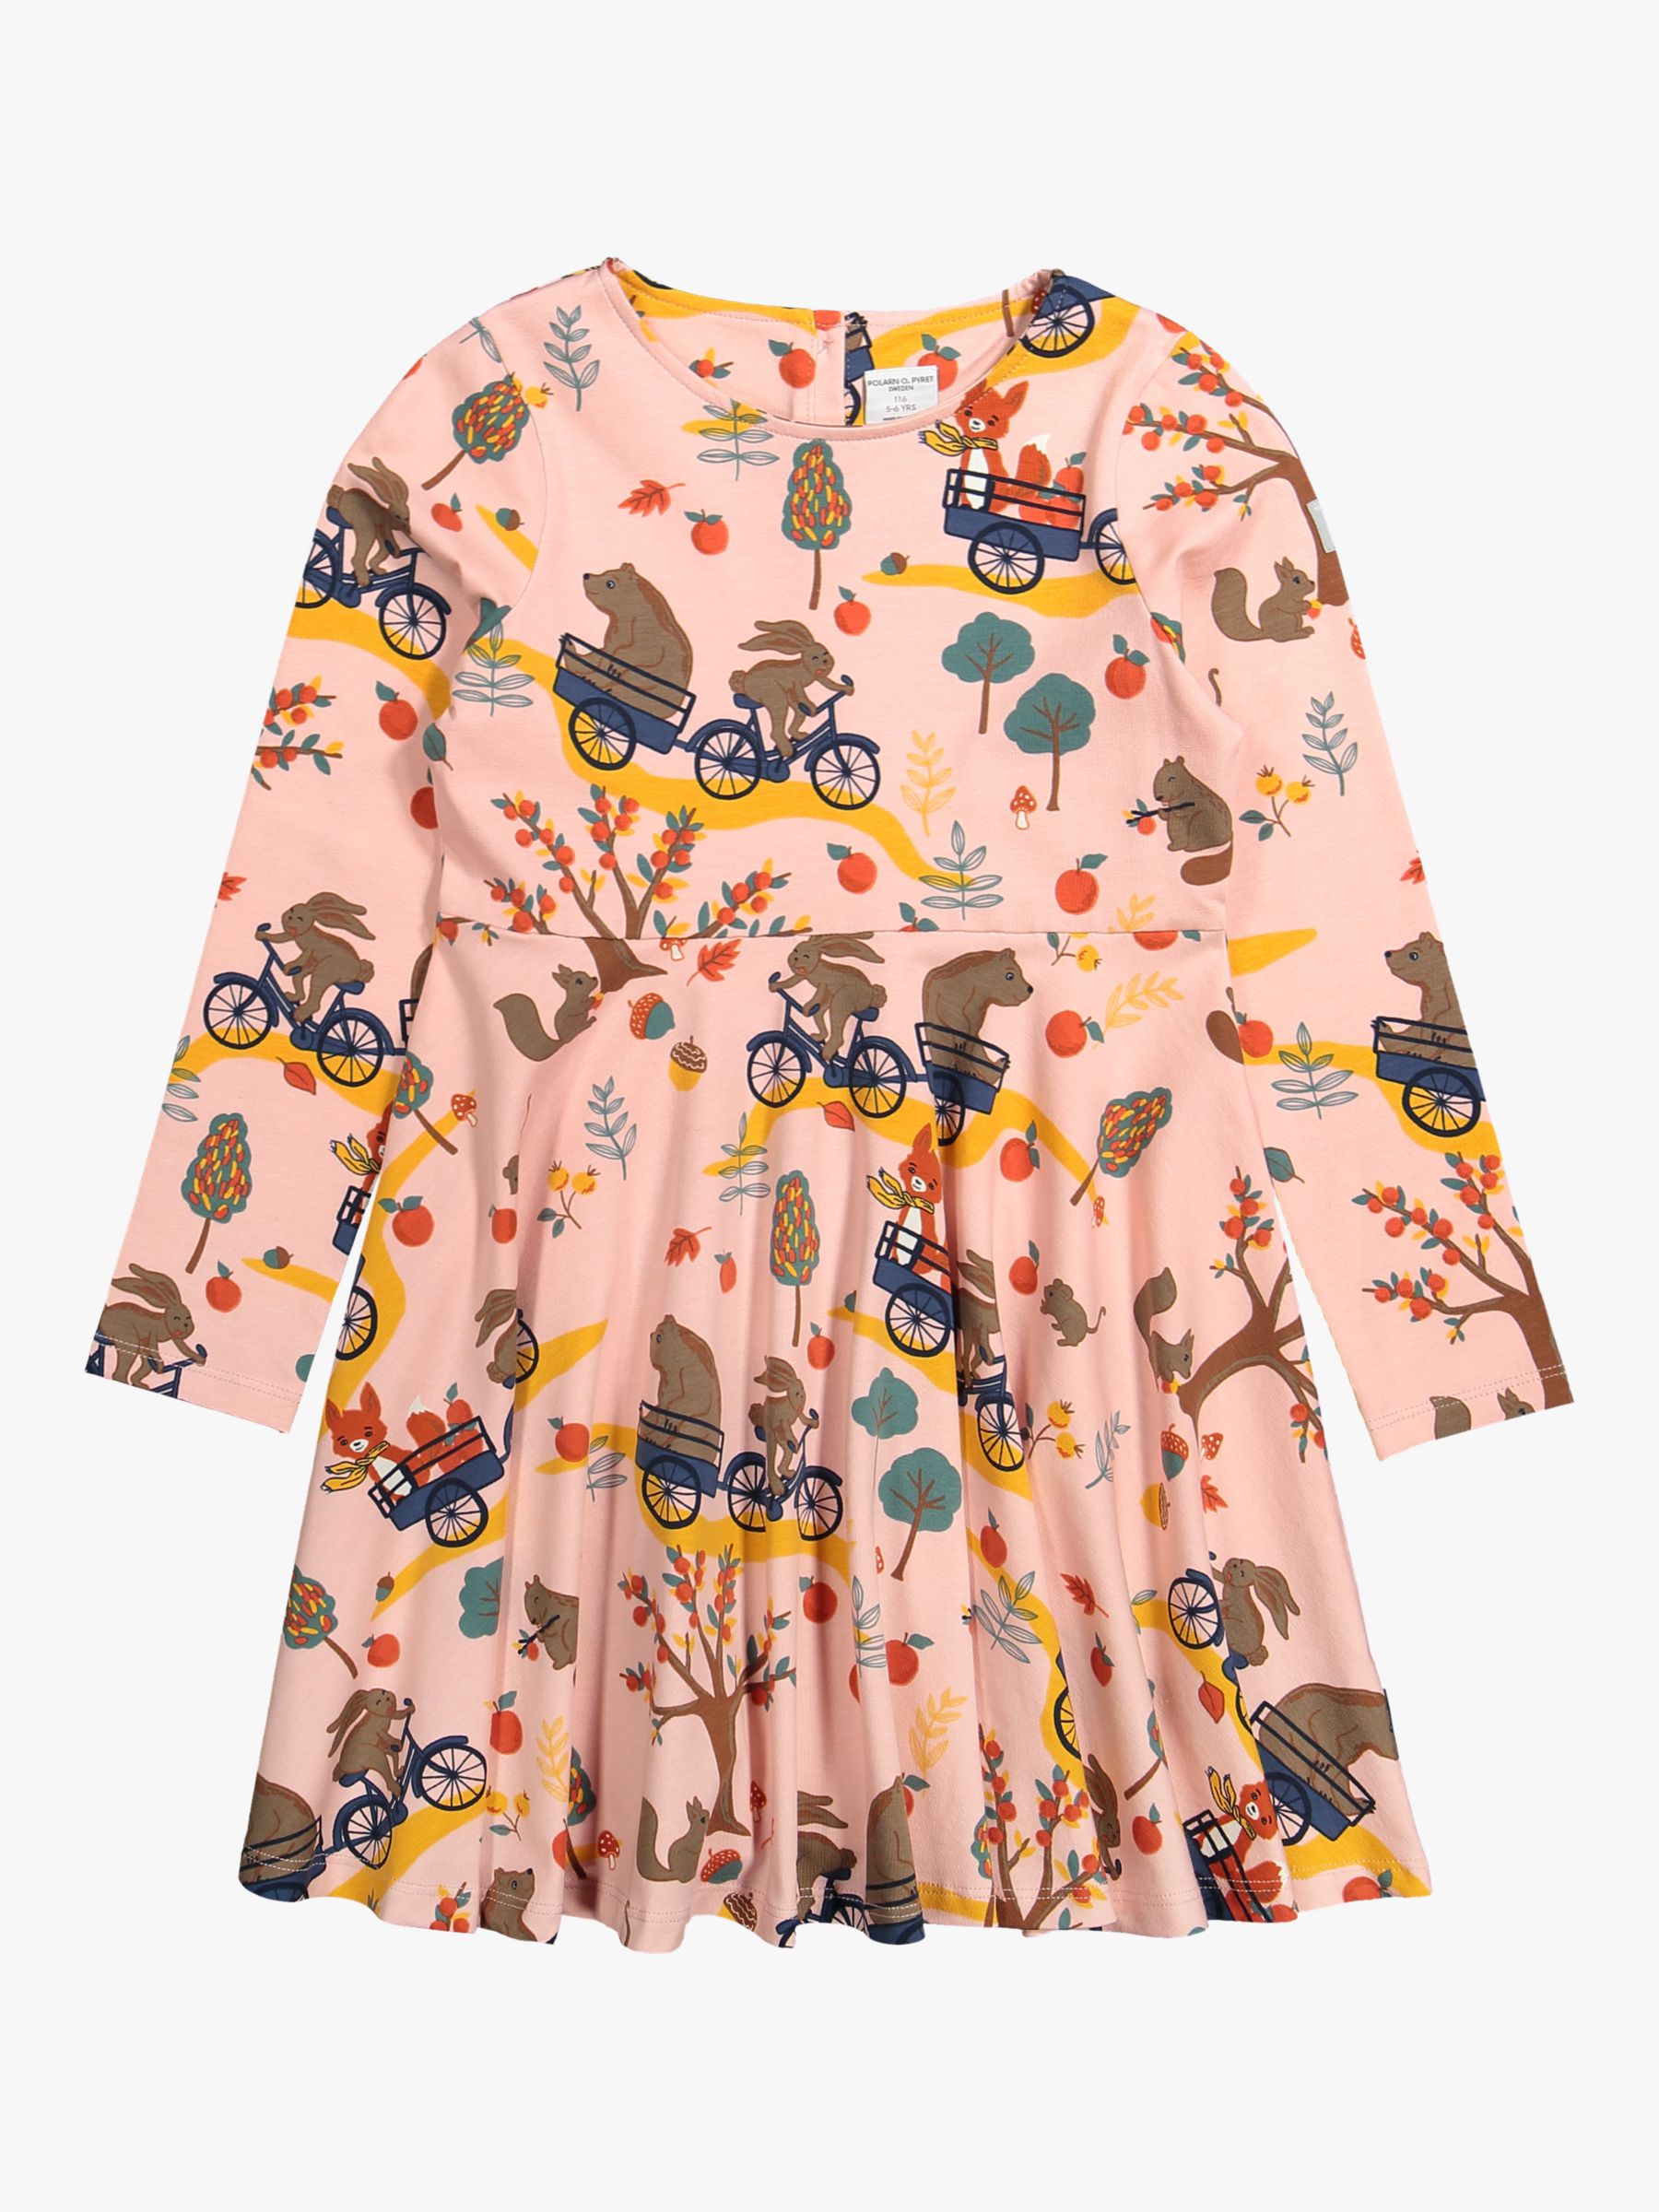 Image of Polarn O Pyret Childrens GOTS Organic Cotton Nordic Print Dress Pink